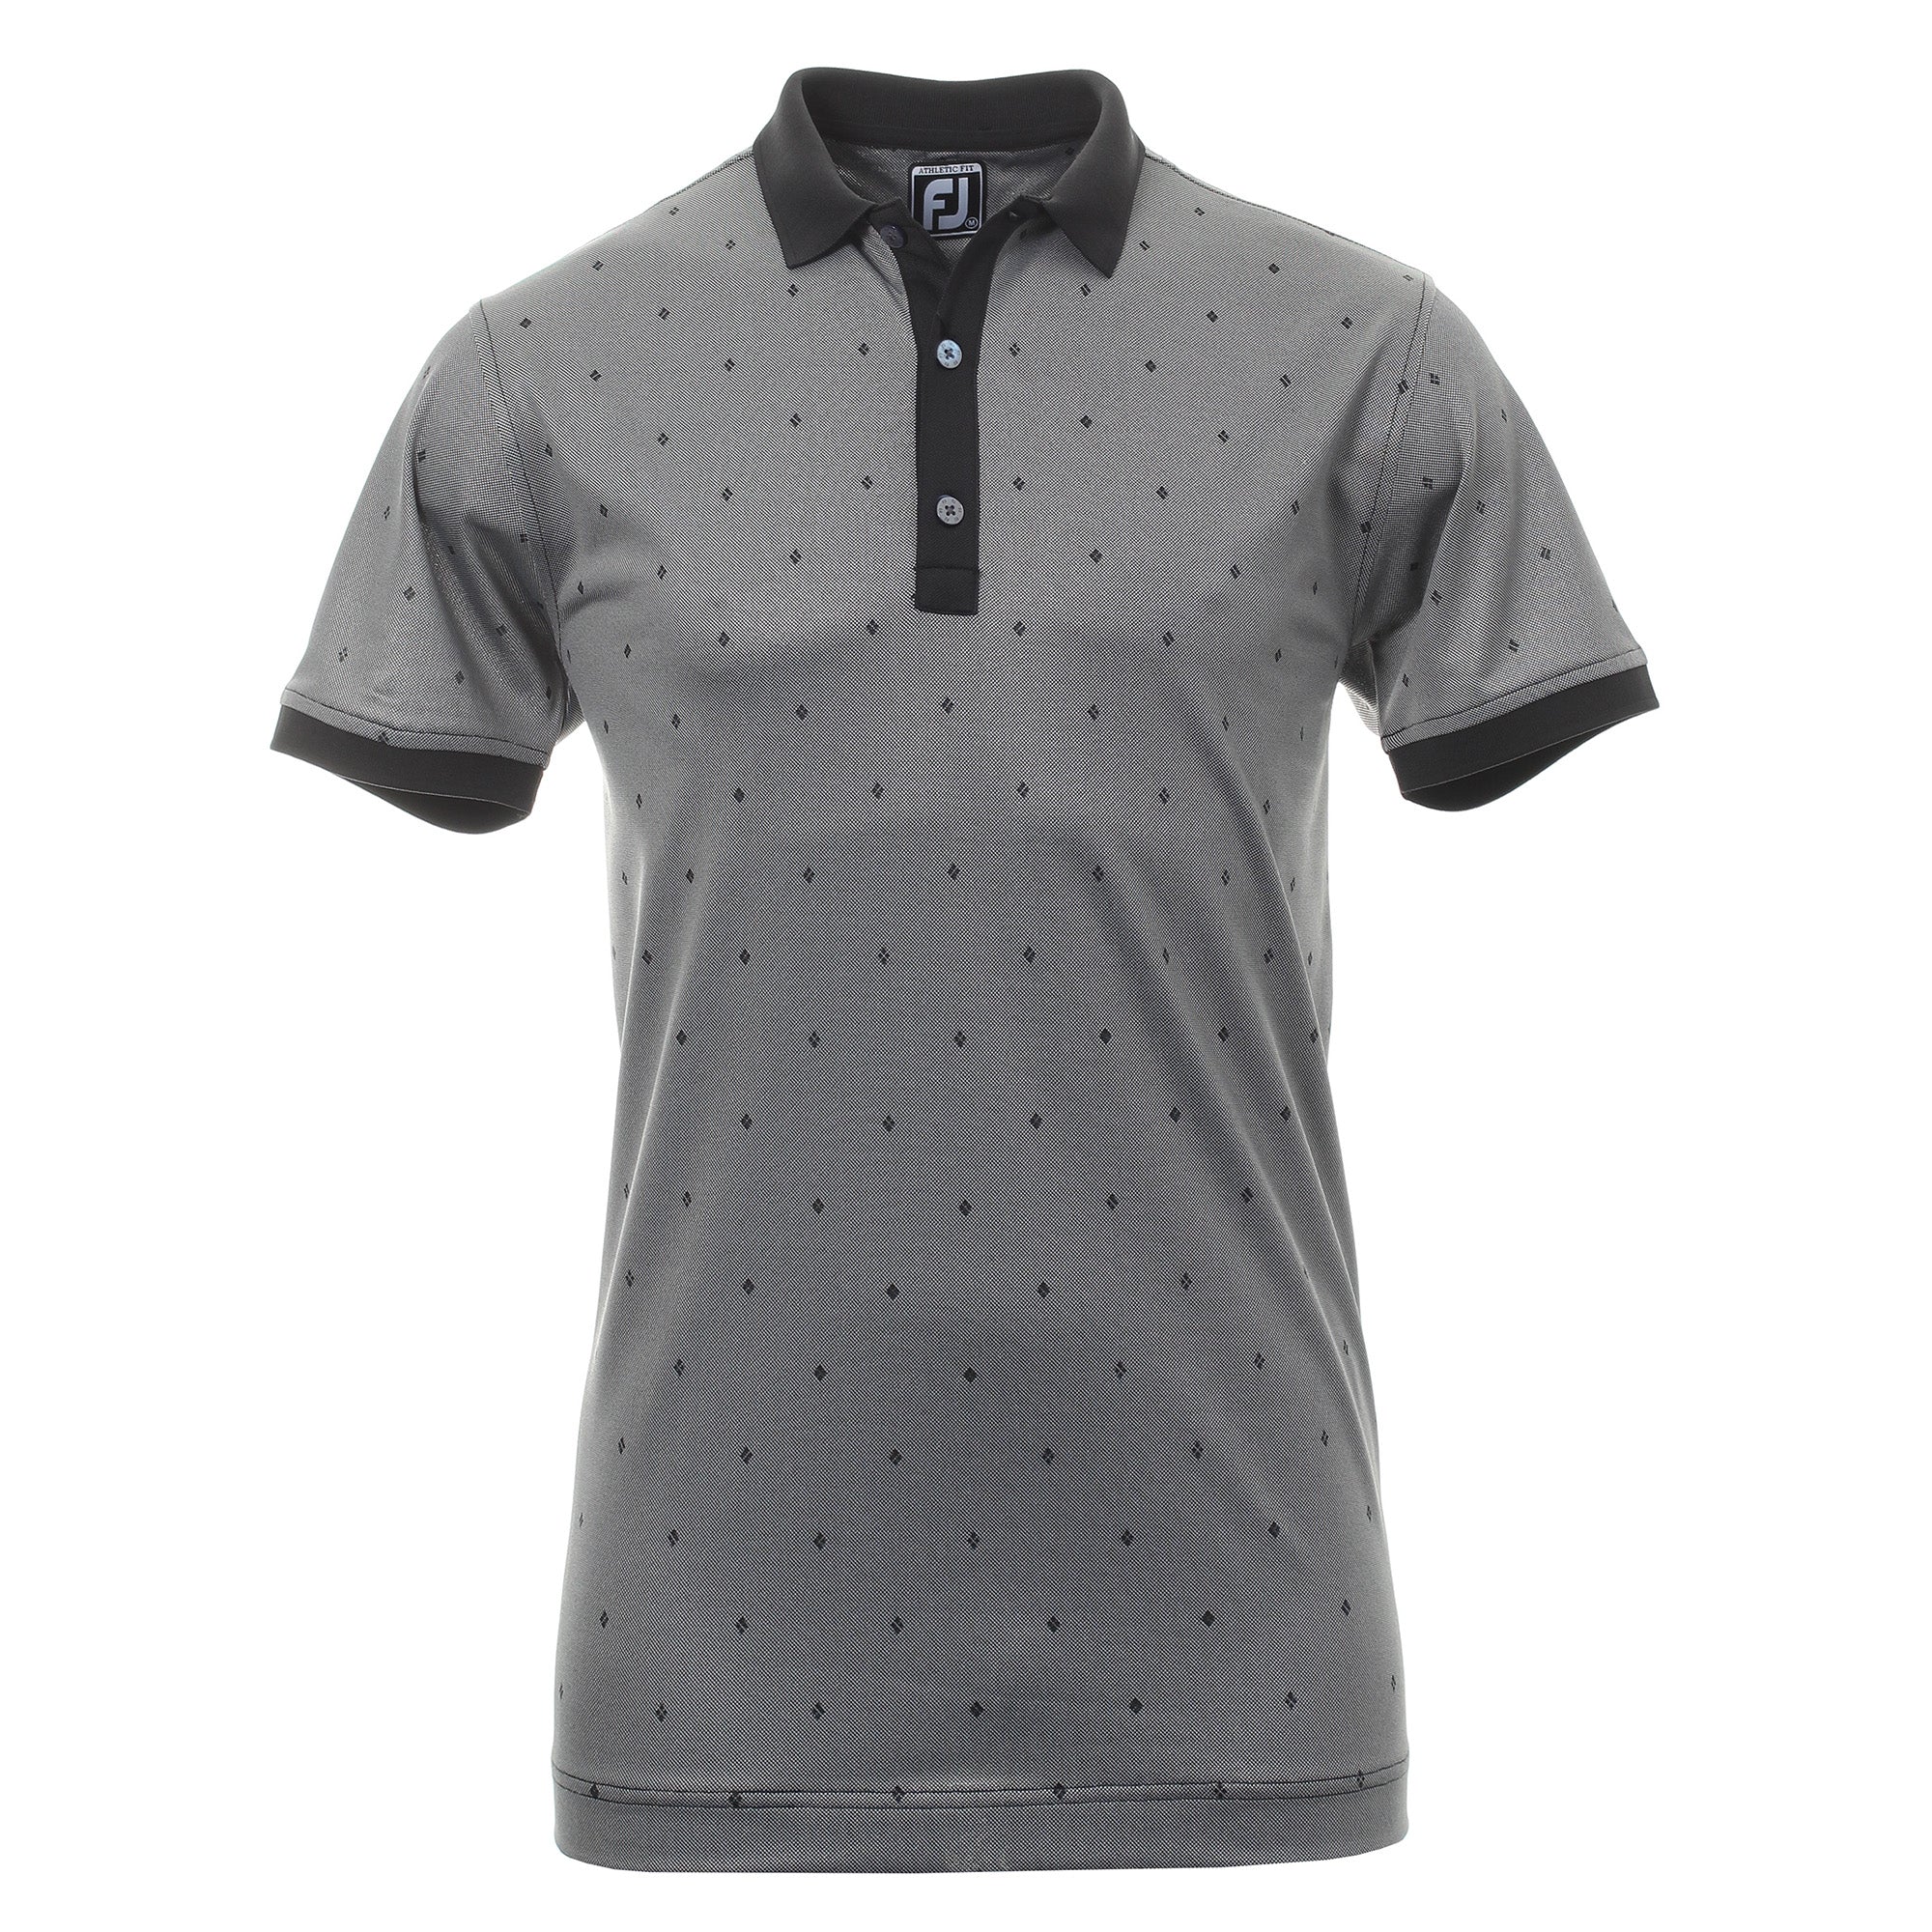 FootJoy Birdseye Argyle Print Golf Shirt 90250 Black White & Function18